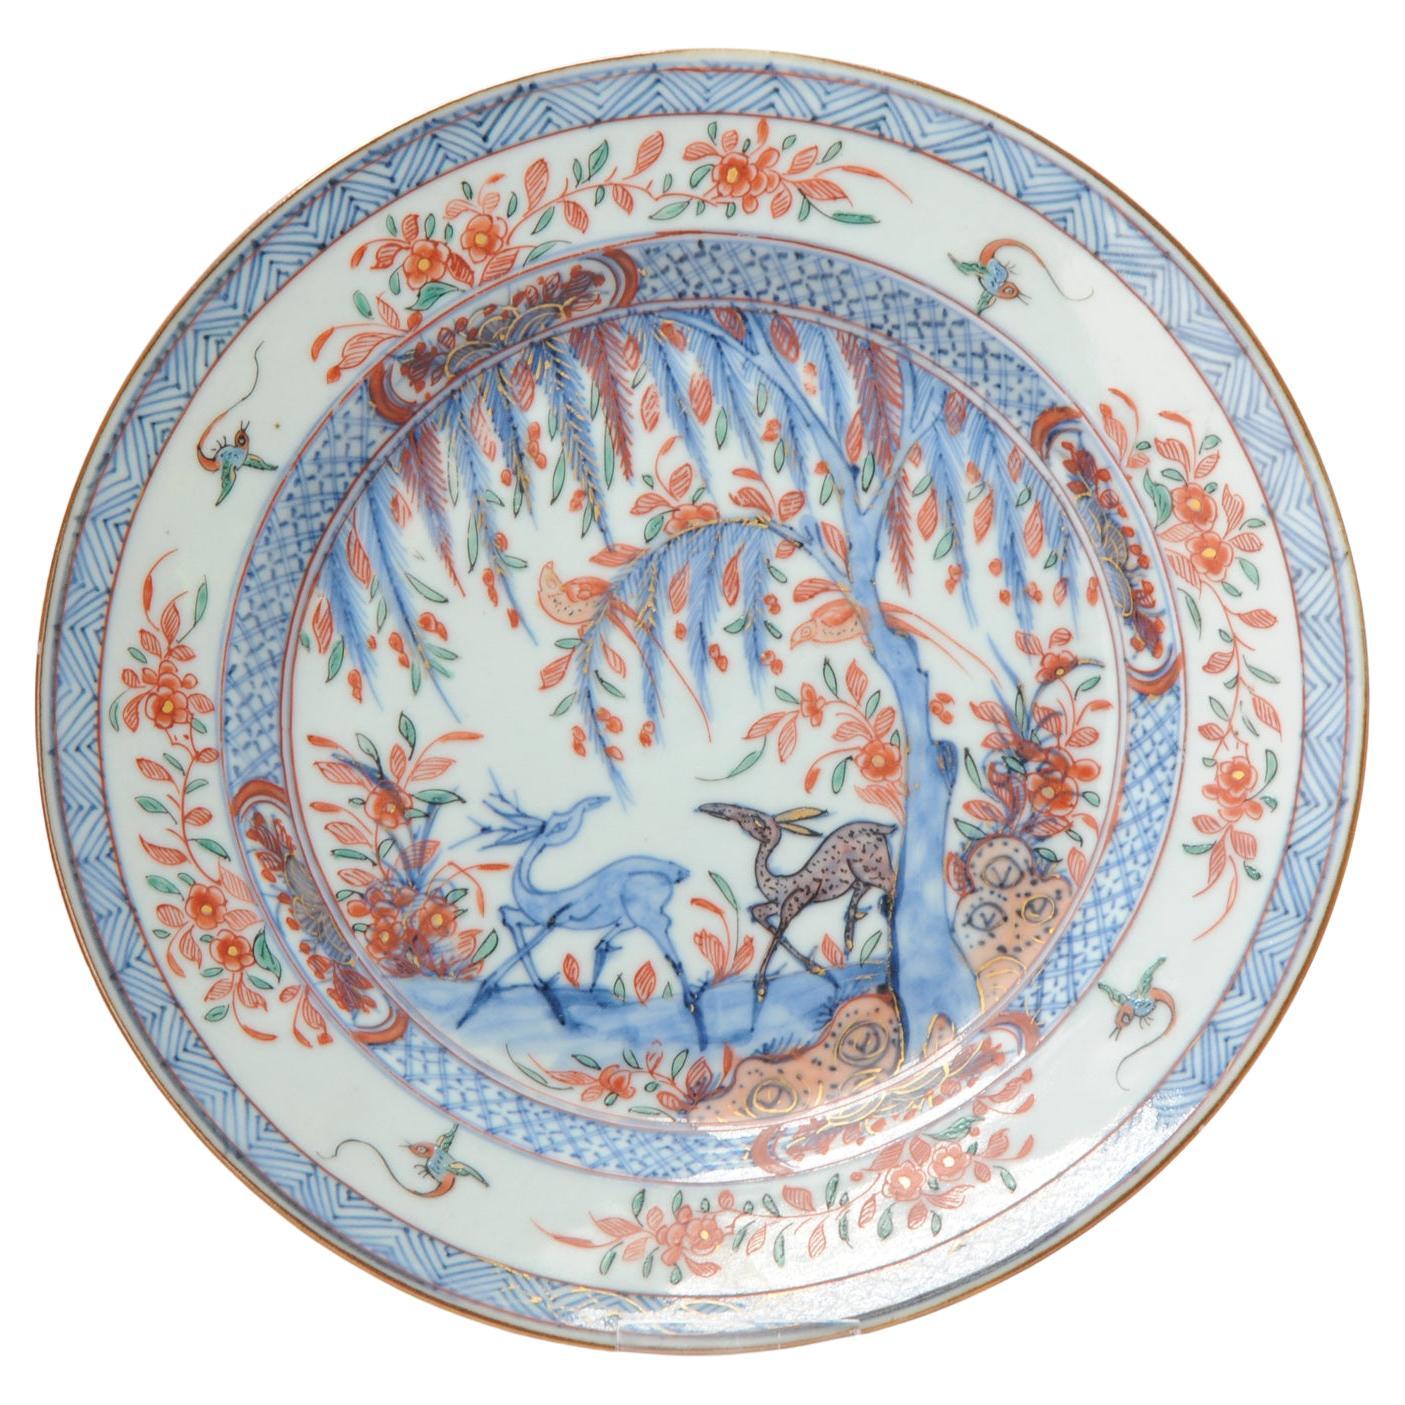 Antique Qianlong Bont Porcelain Deer Bird Chinese Plates, 18th Century